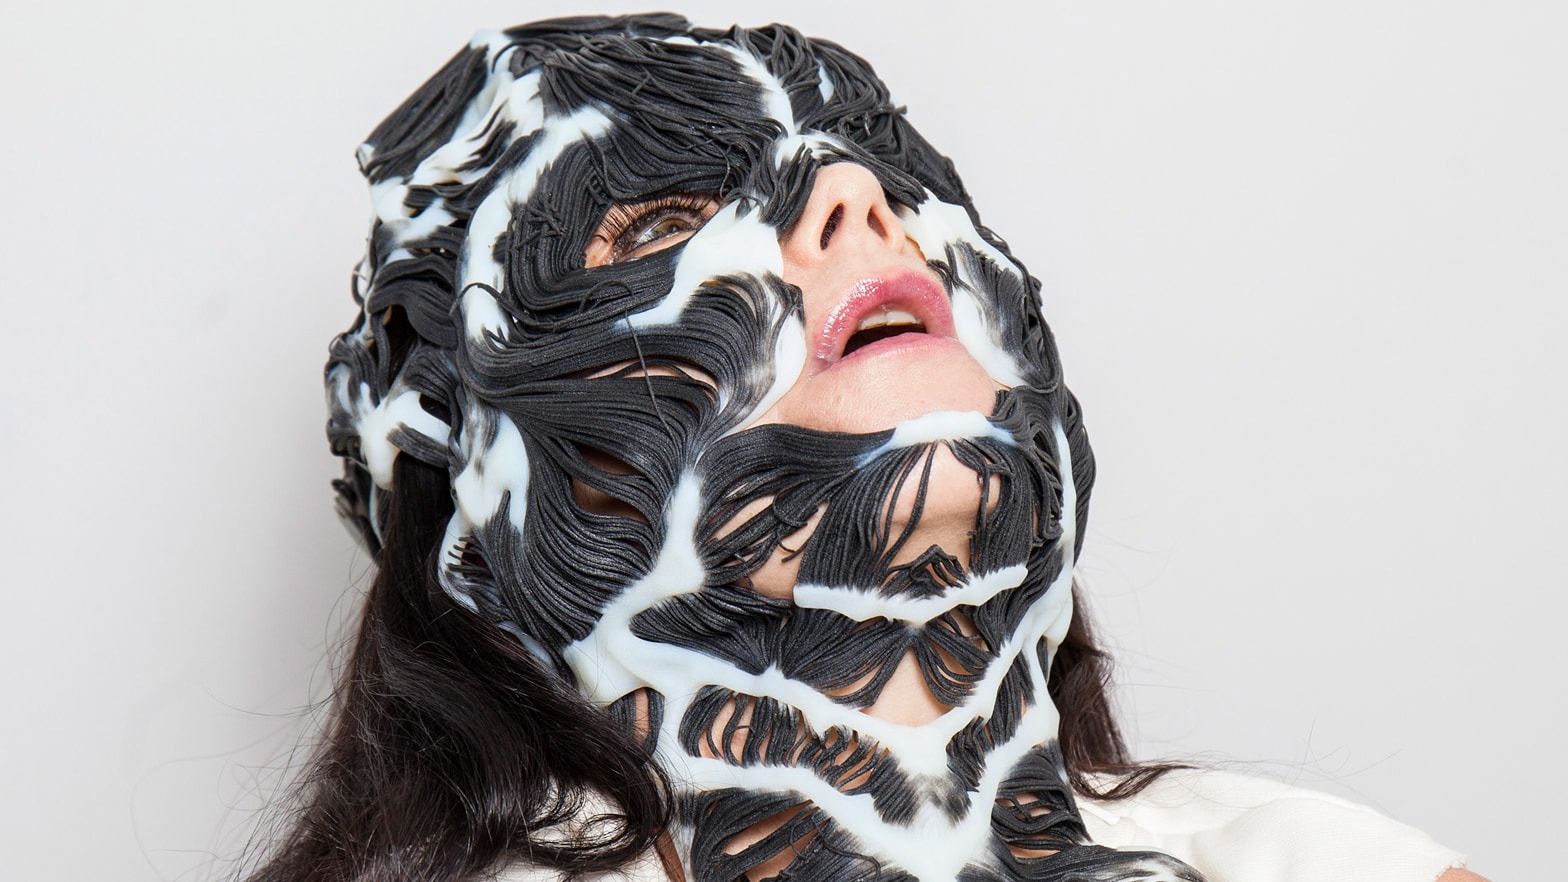 Björk wearing the Rottlace mask